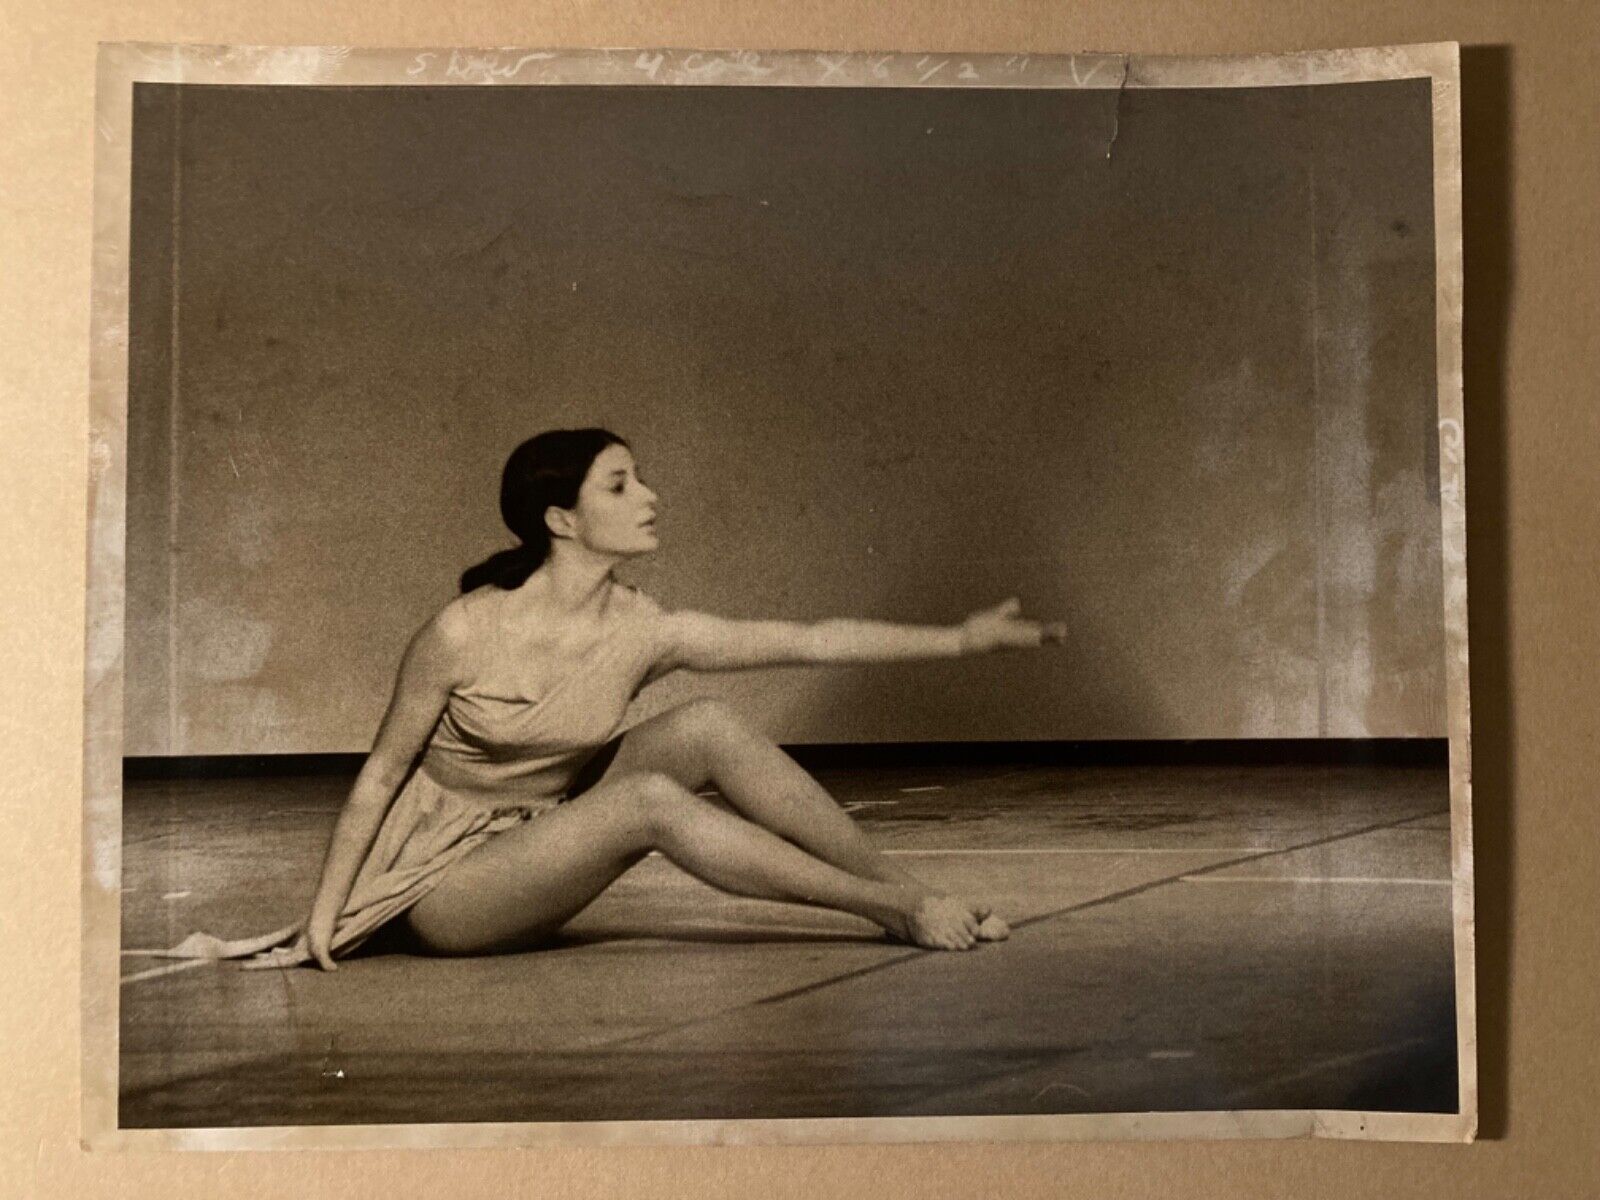 Revolutionary modern dancer ballet photo Wendy Perron “One Morning” April 1968